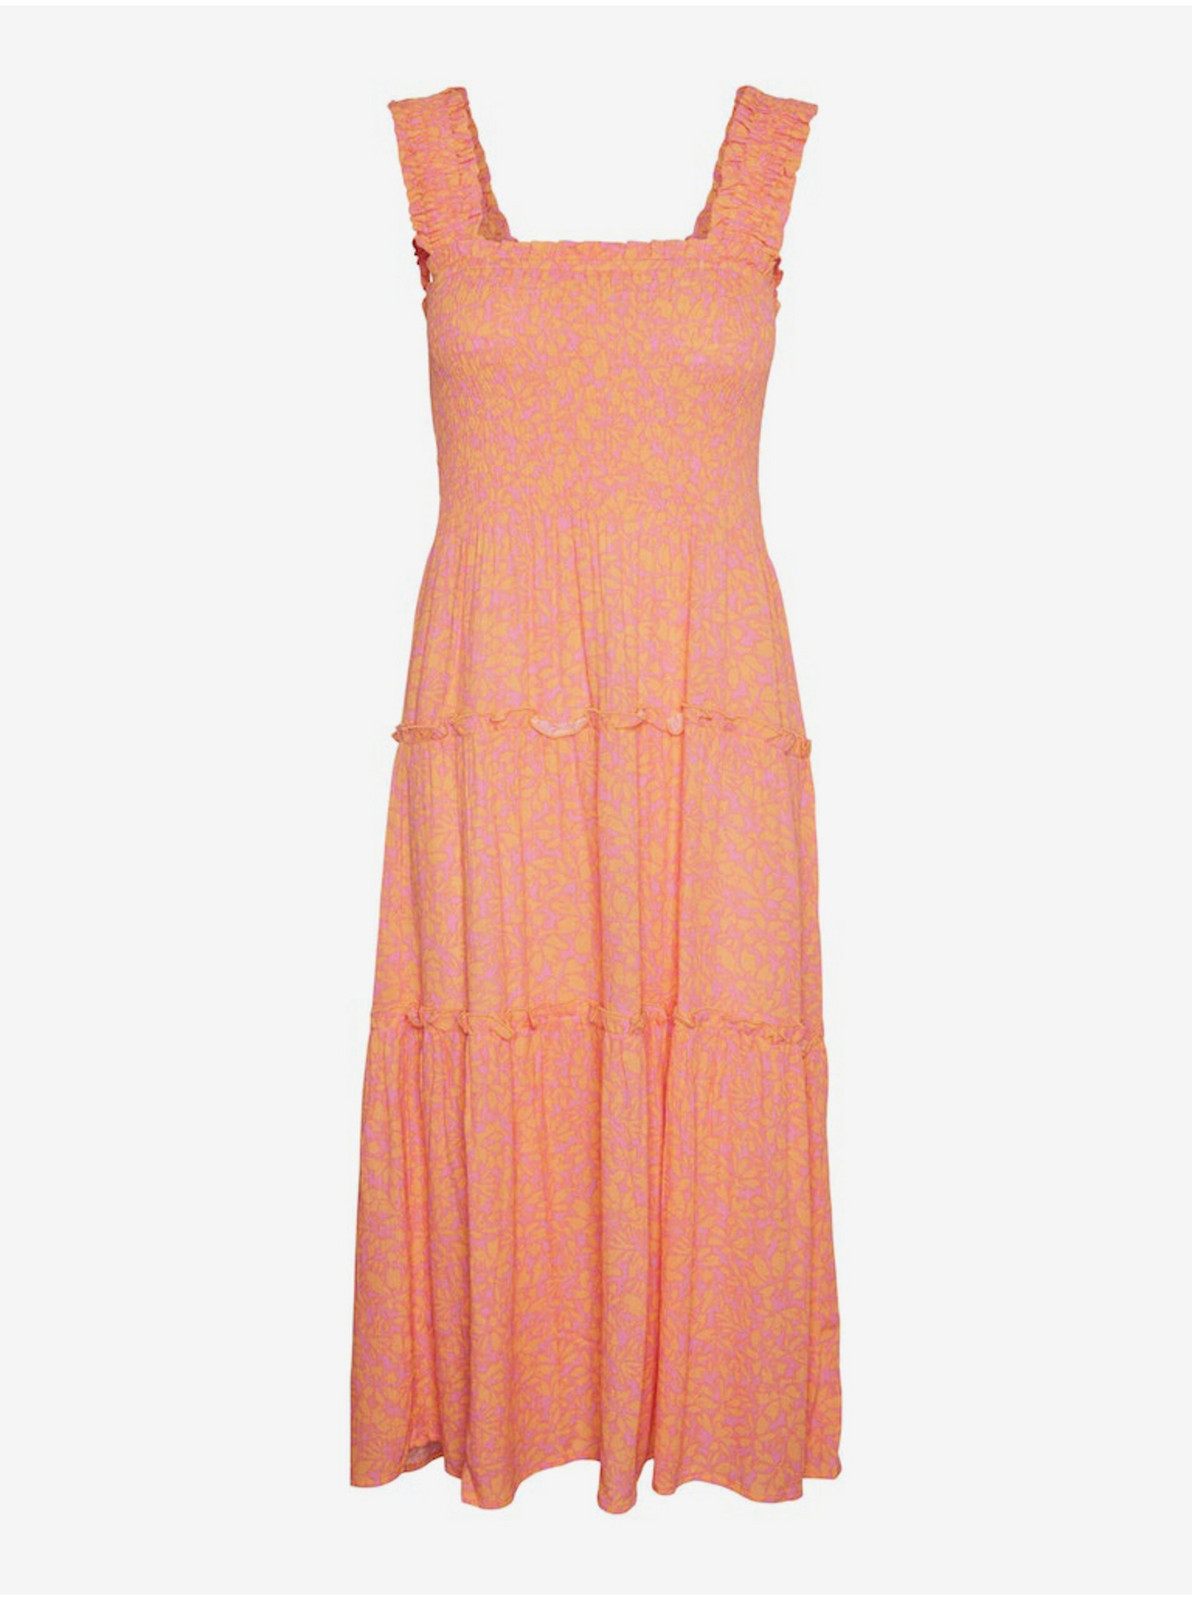 Růžovo-oranžové dámské květované midi šaty Vero Moda Menny - Dámské